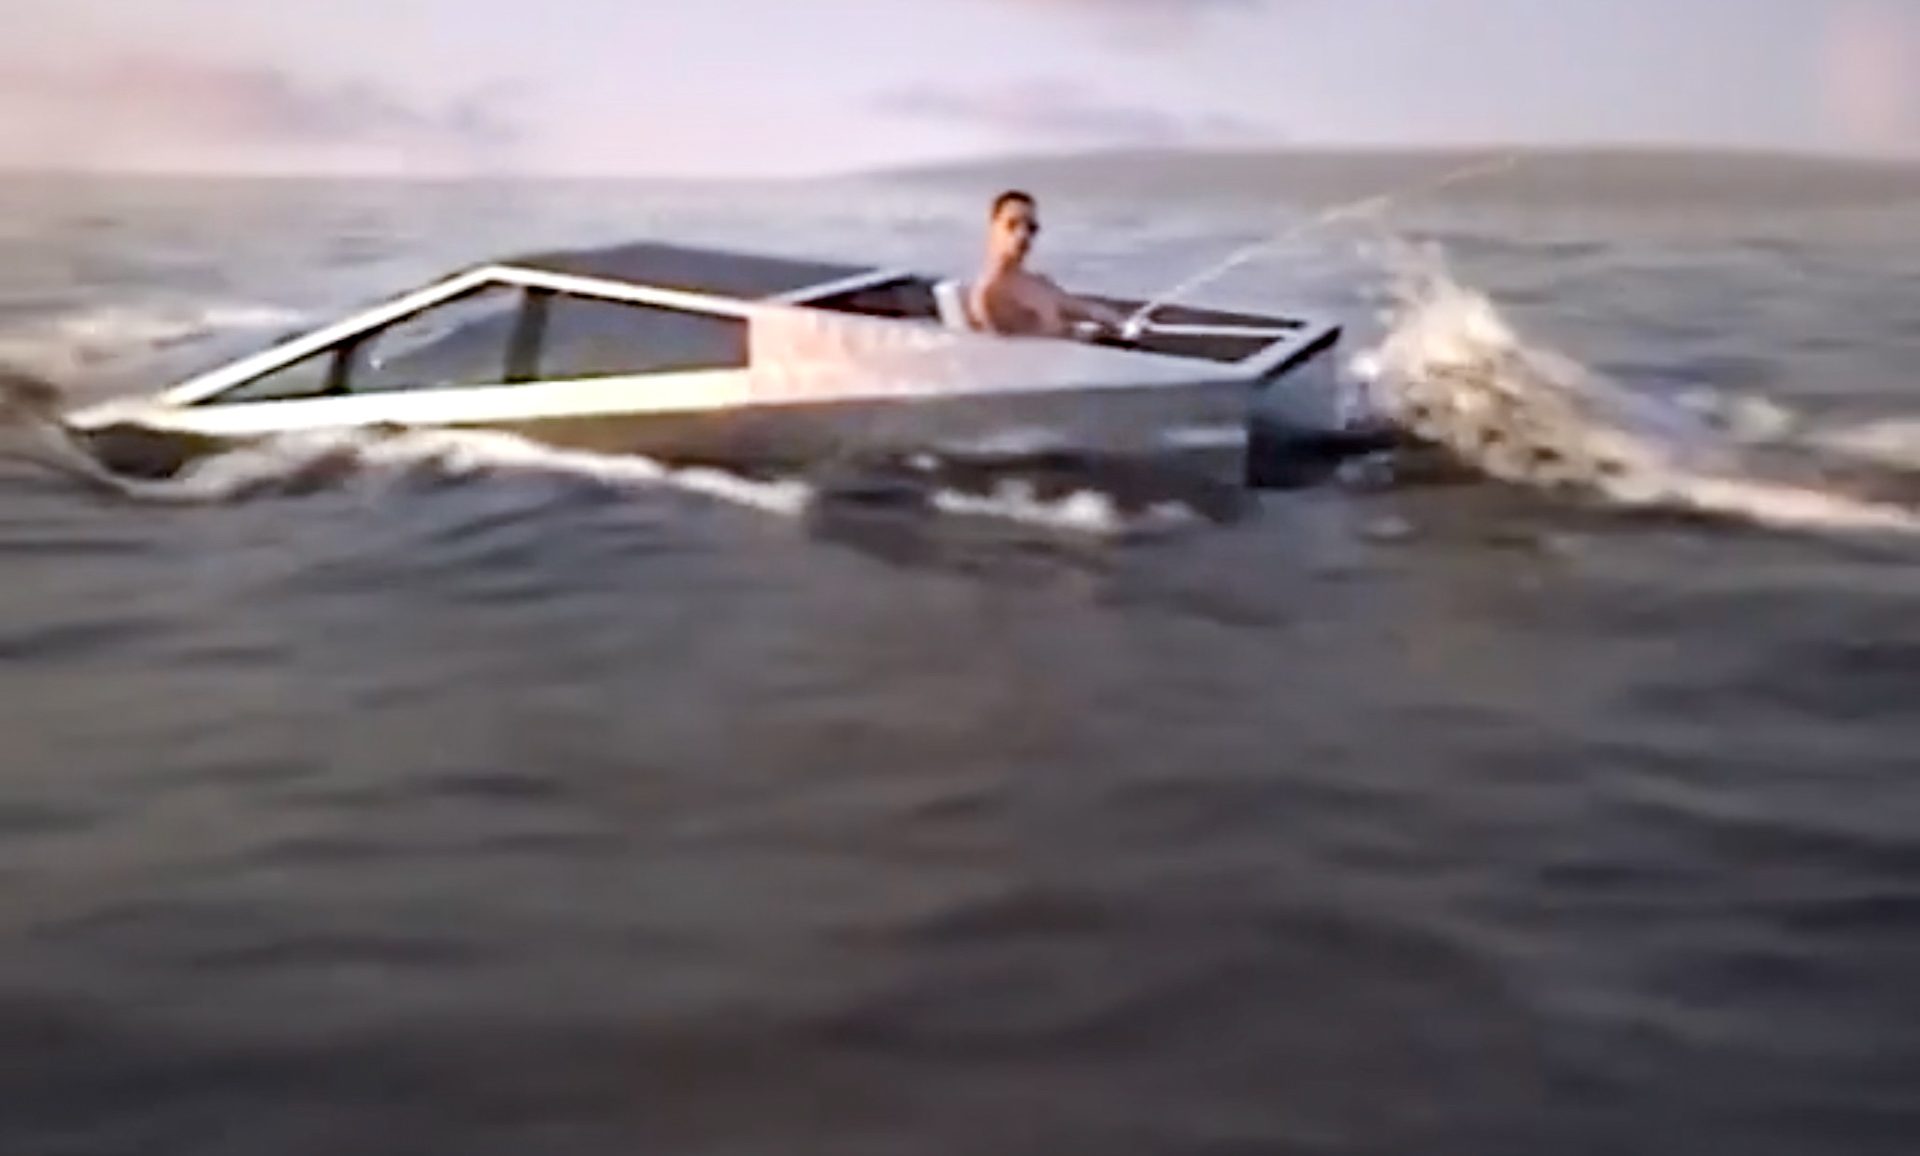 Tesla Cybertruck floating in water render